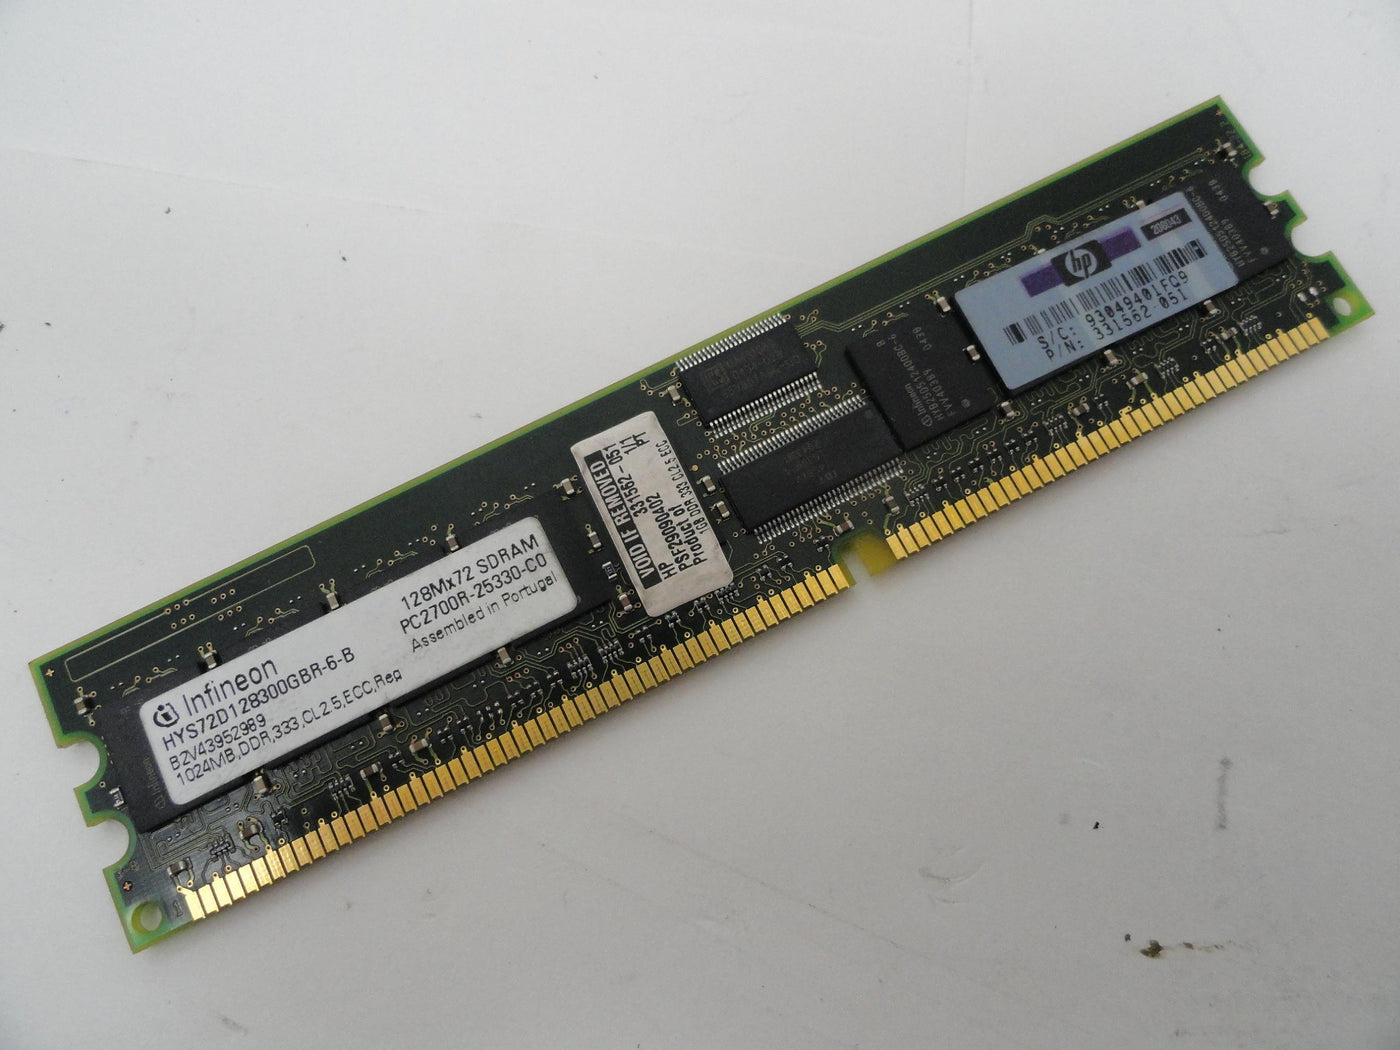 PR14069_PC2700R-25330-C0_HP/Infineon 1GBPC2700 DIMM 333Mhz DDR - Image3